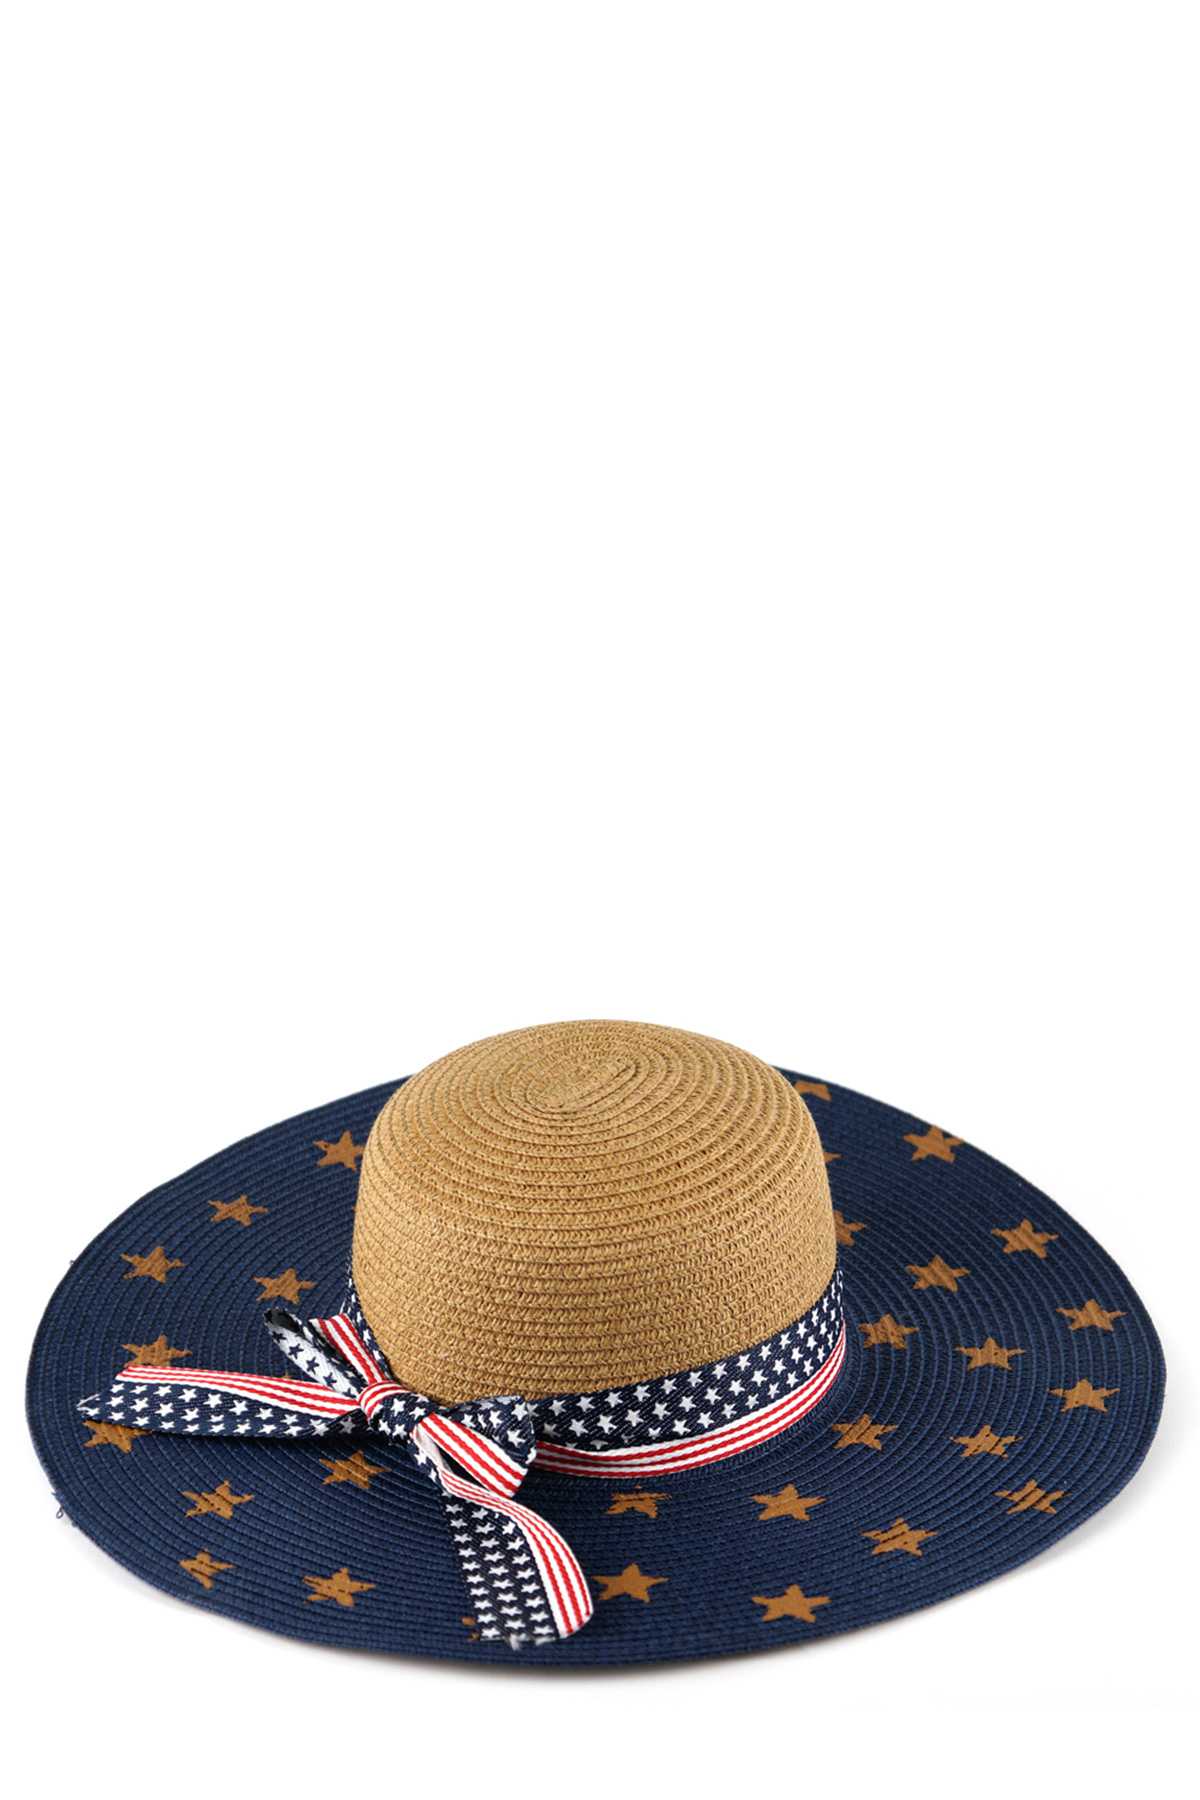 American flag Floppy Hat